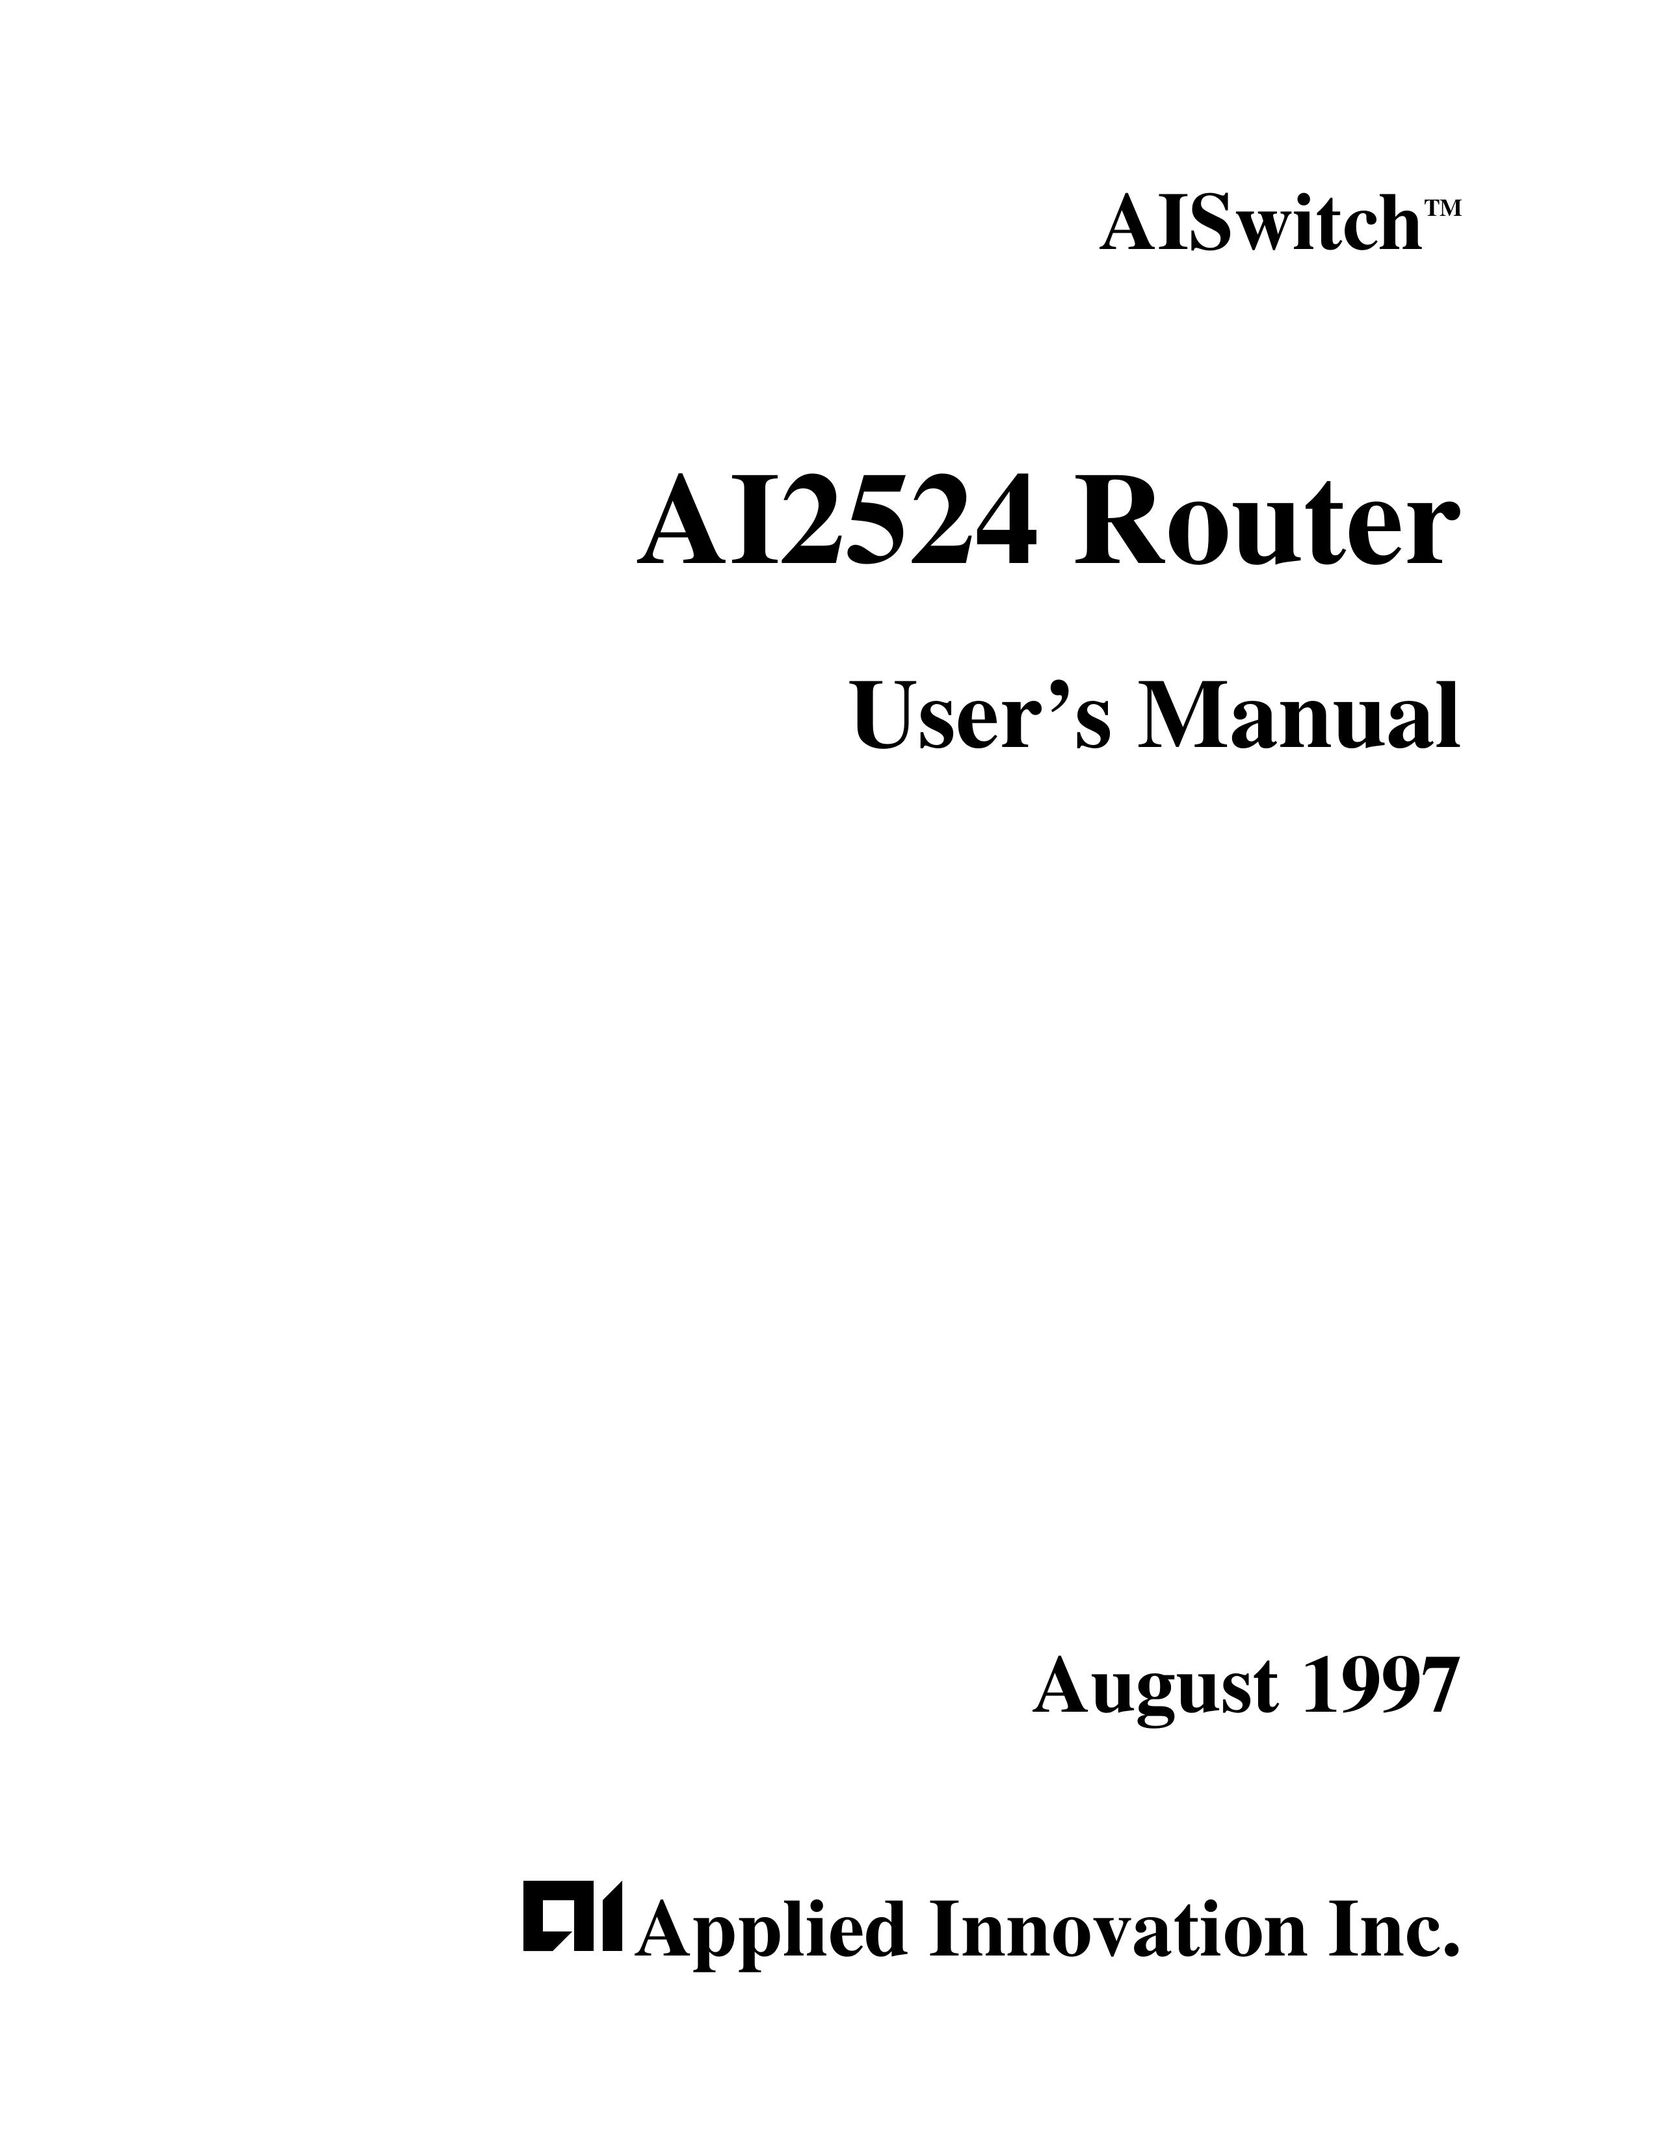 AIS AI2524 Network Router User Manual